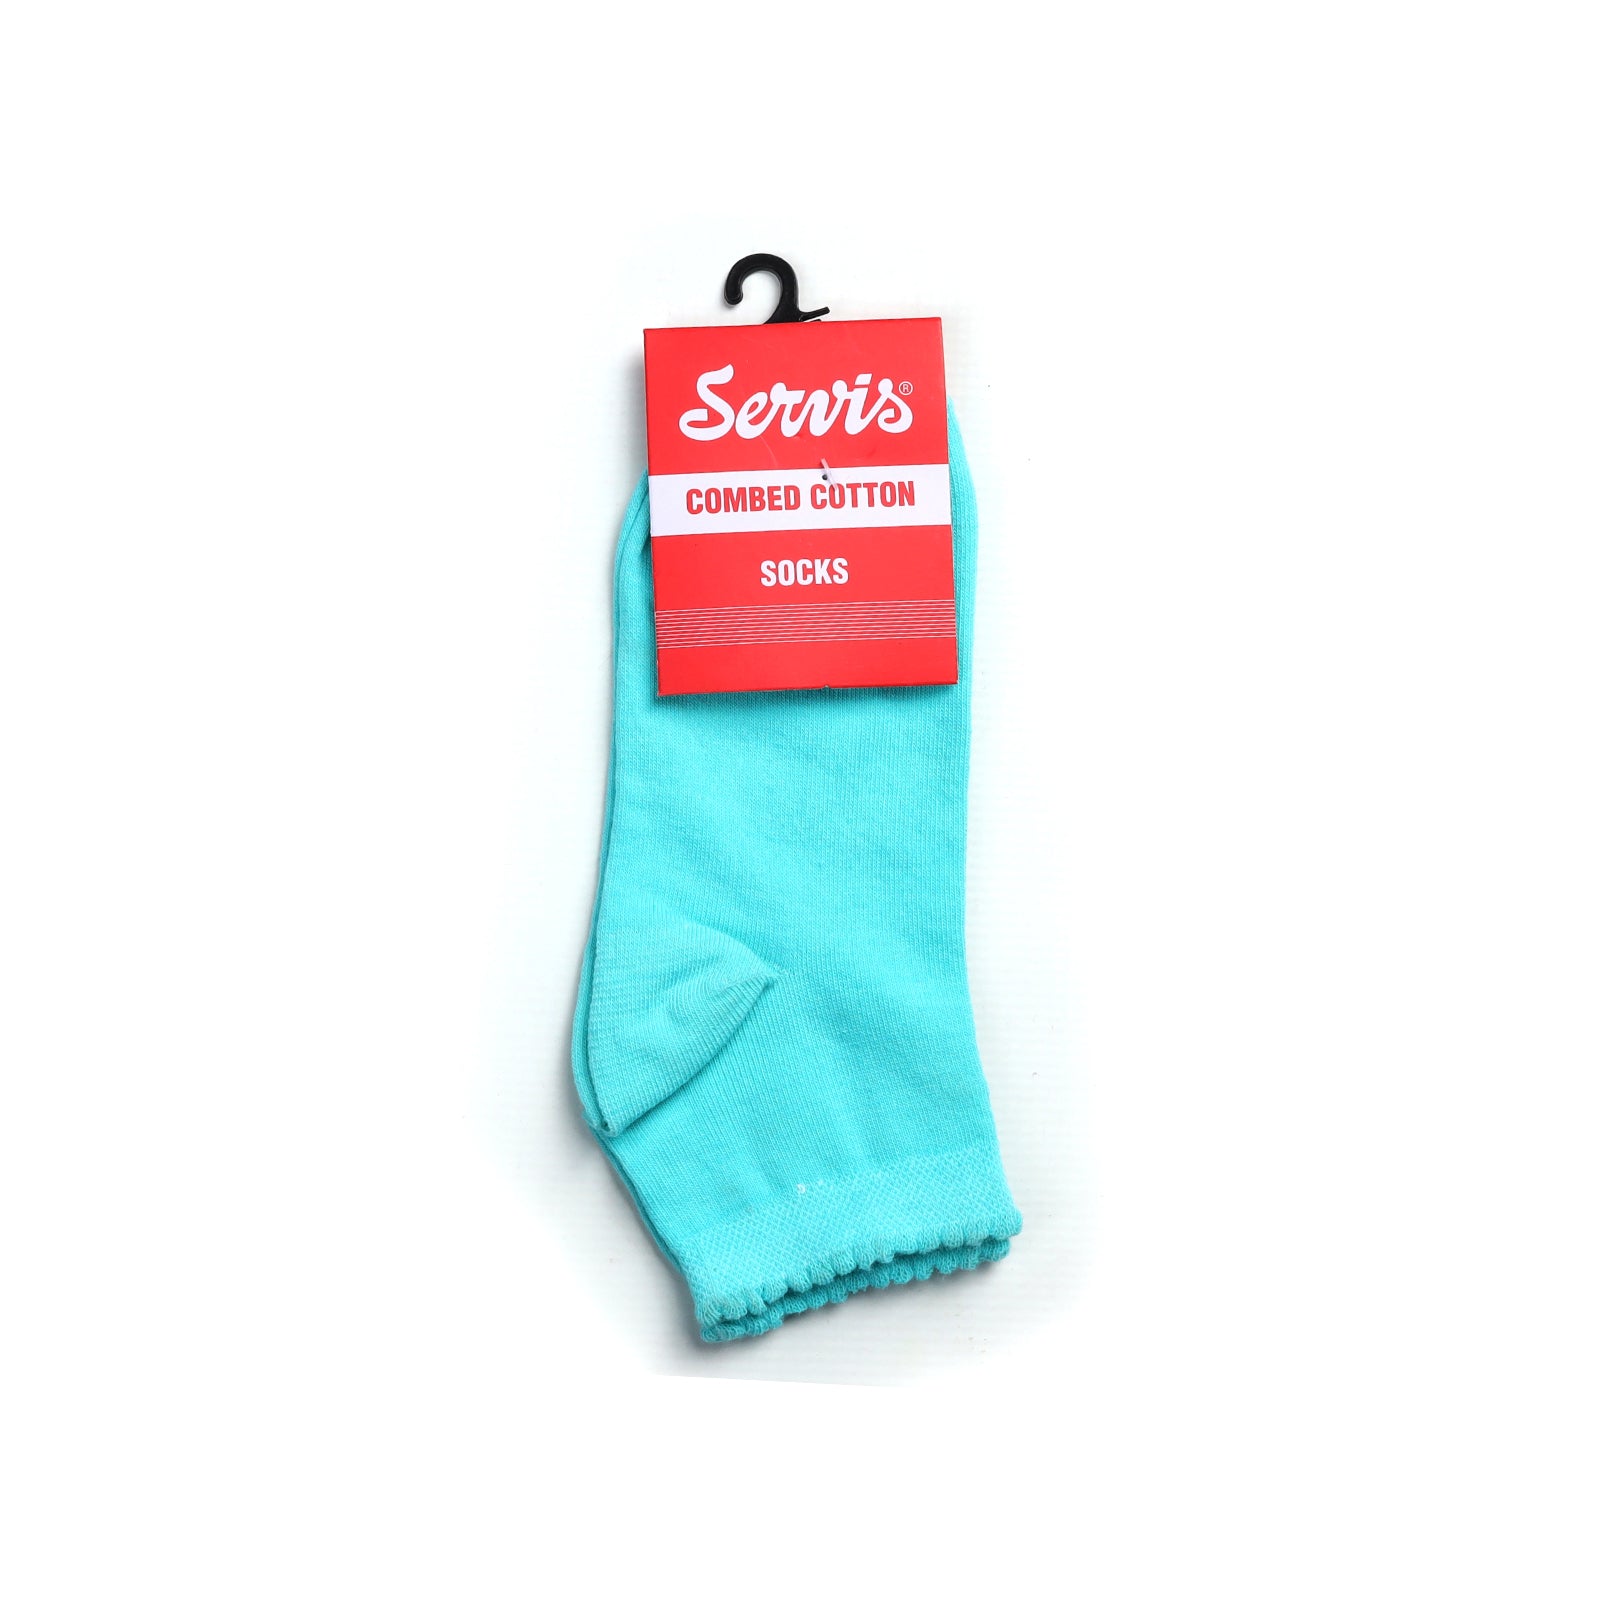 A-SB-0300221-Socks